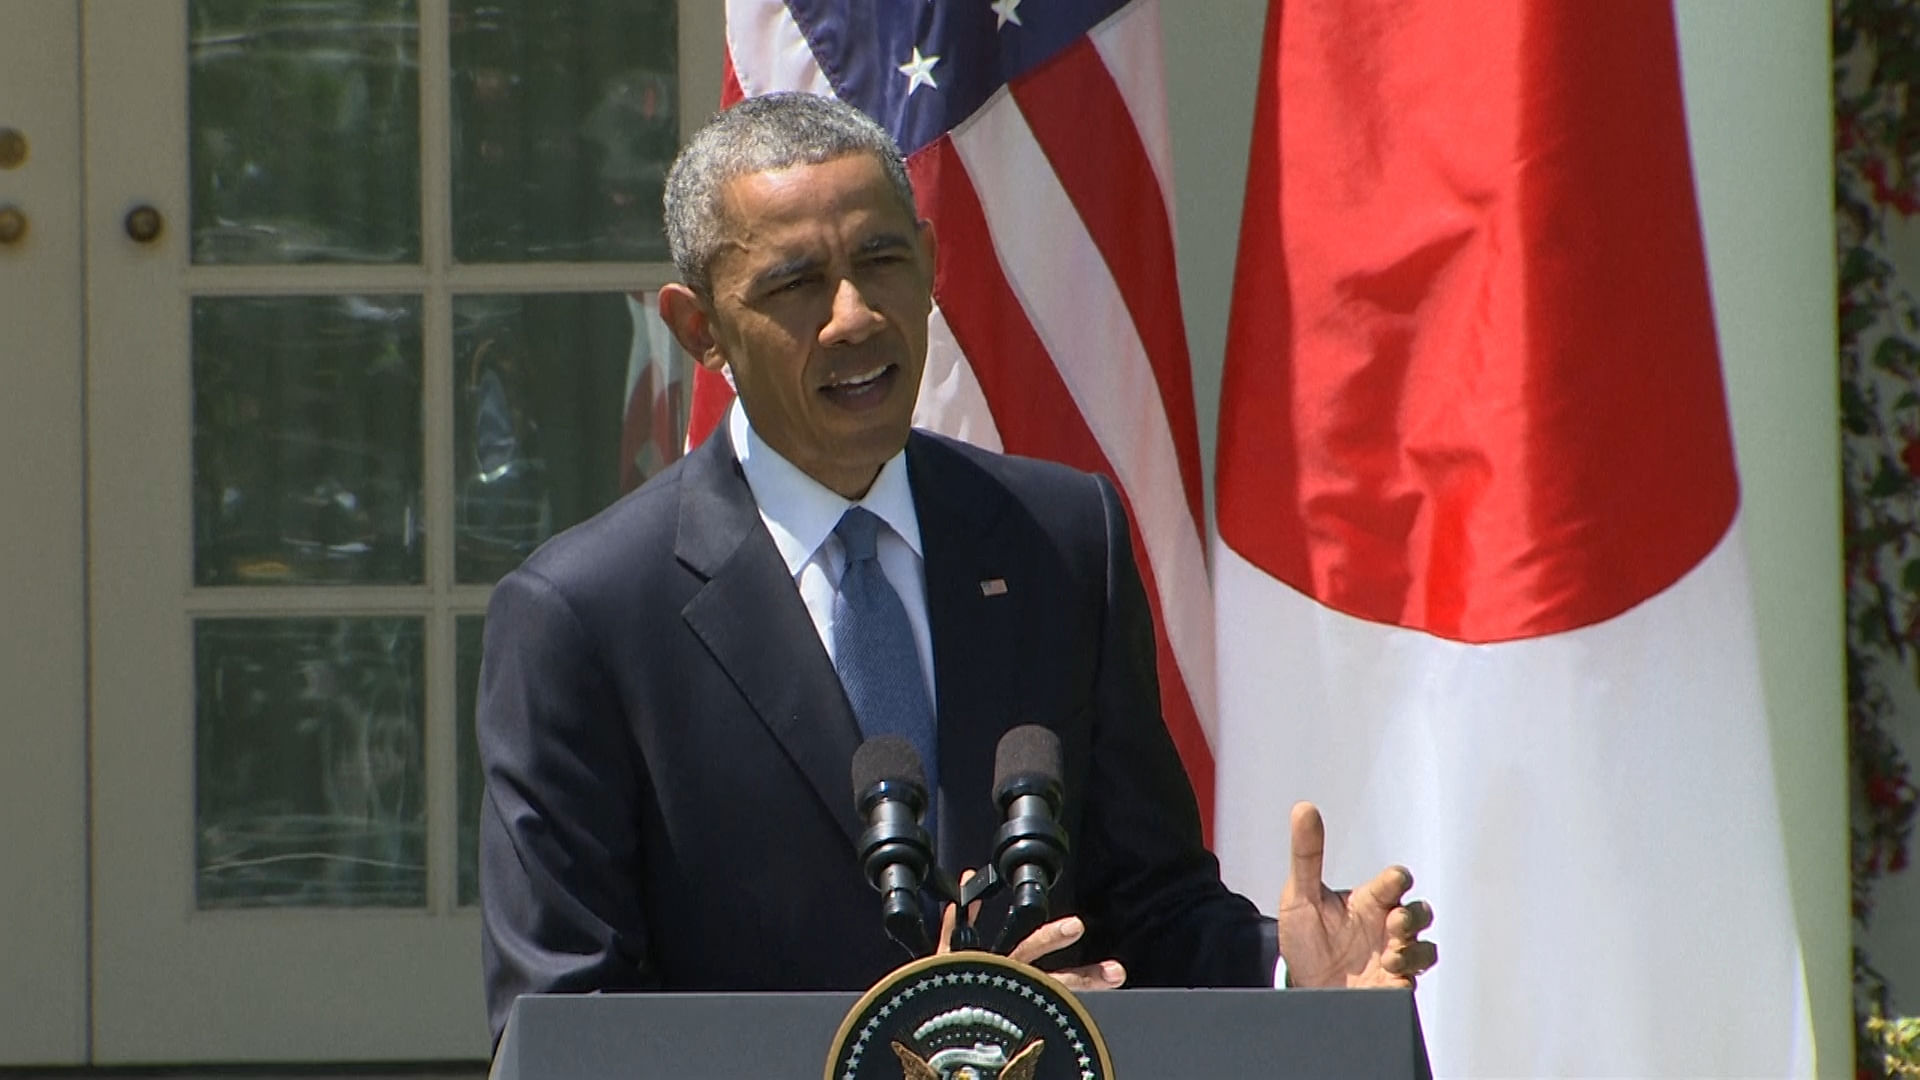 File photo of US President Obama addressing the media. (Photo: AP)